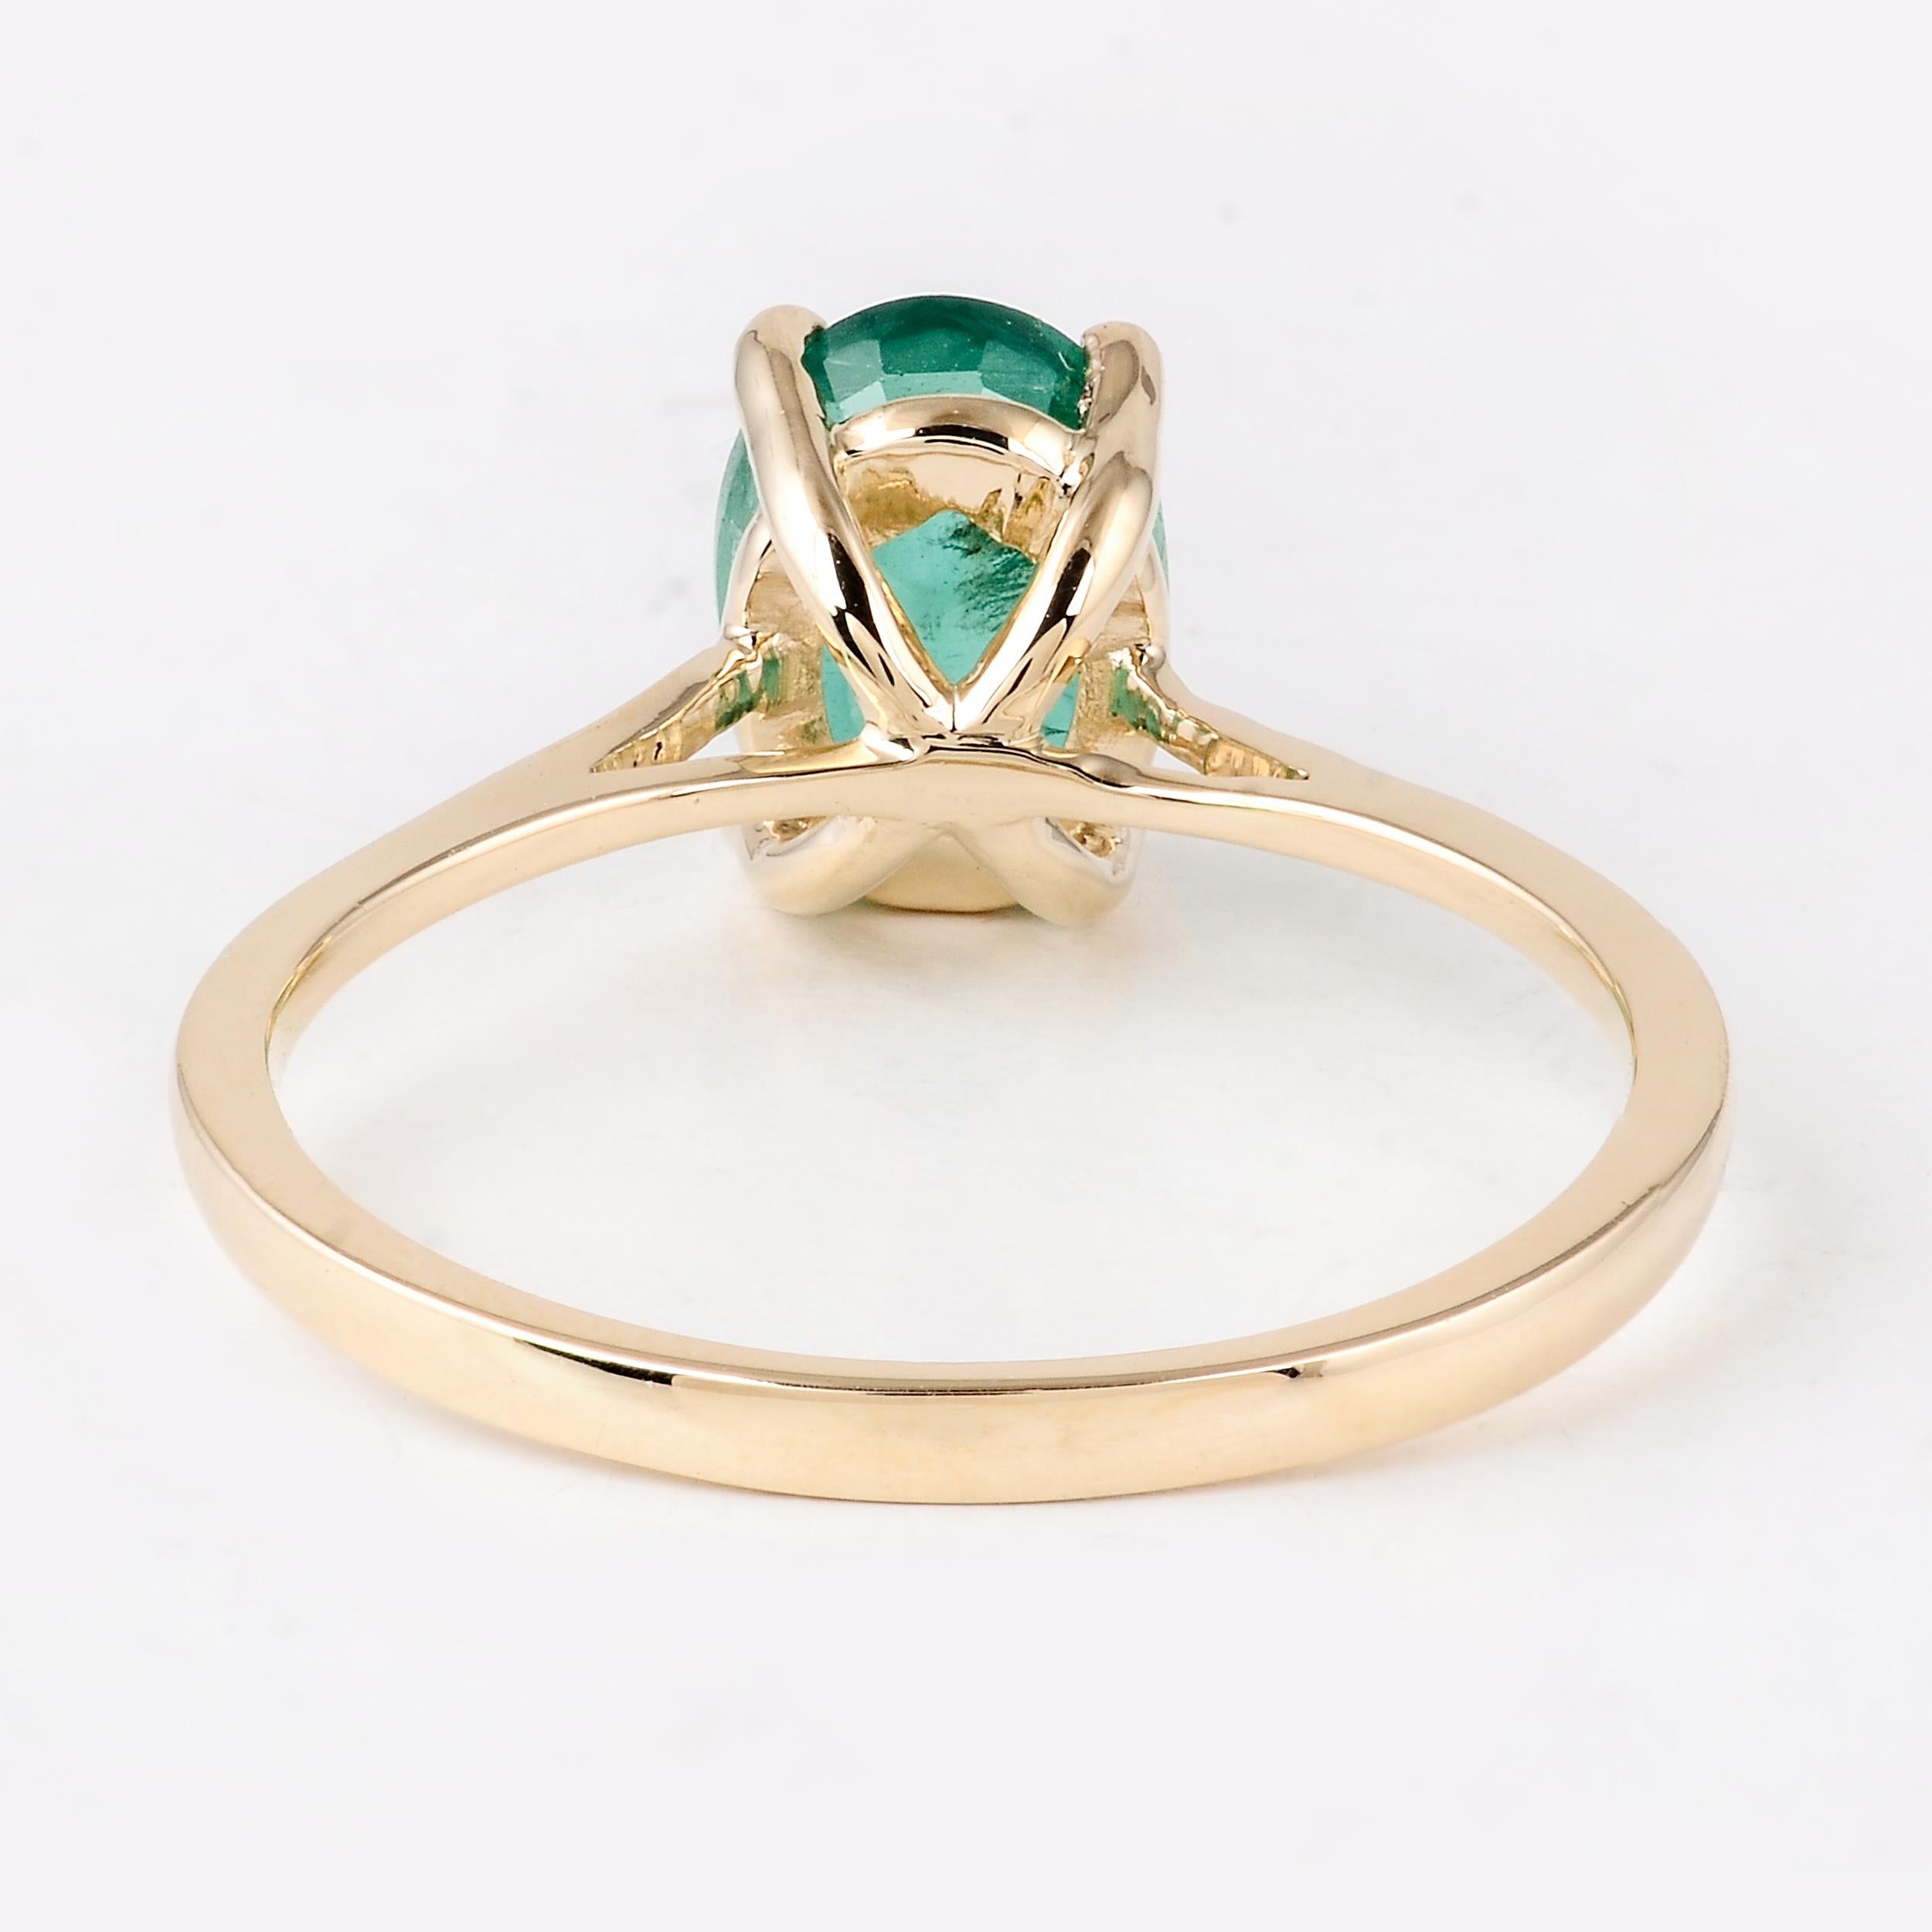 Elegant 14K 1.33ct Emerald Cocktail Ring, Size 7 - Timeless & Elegant Jewelry 2